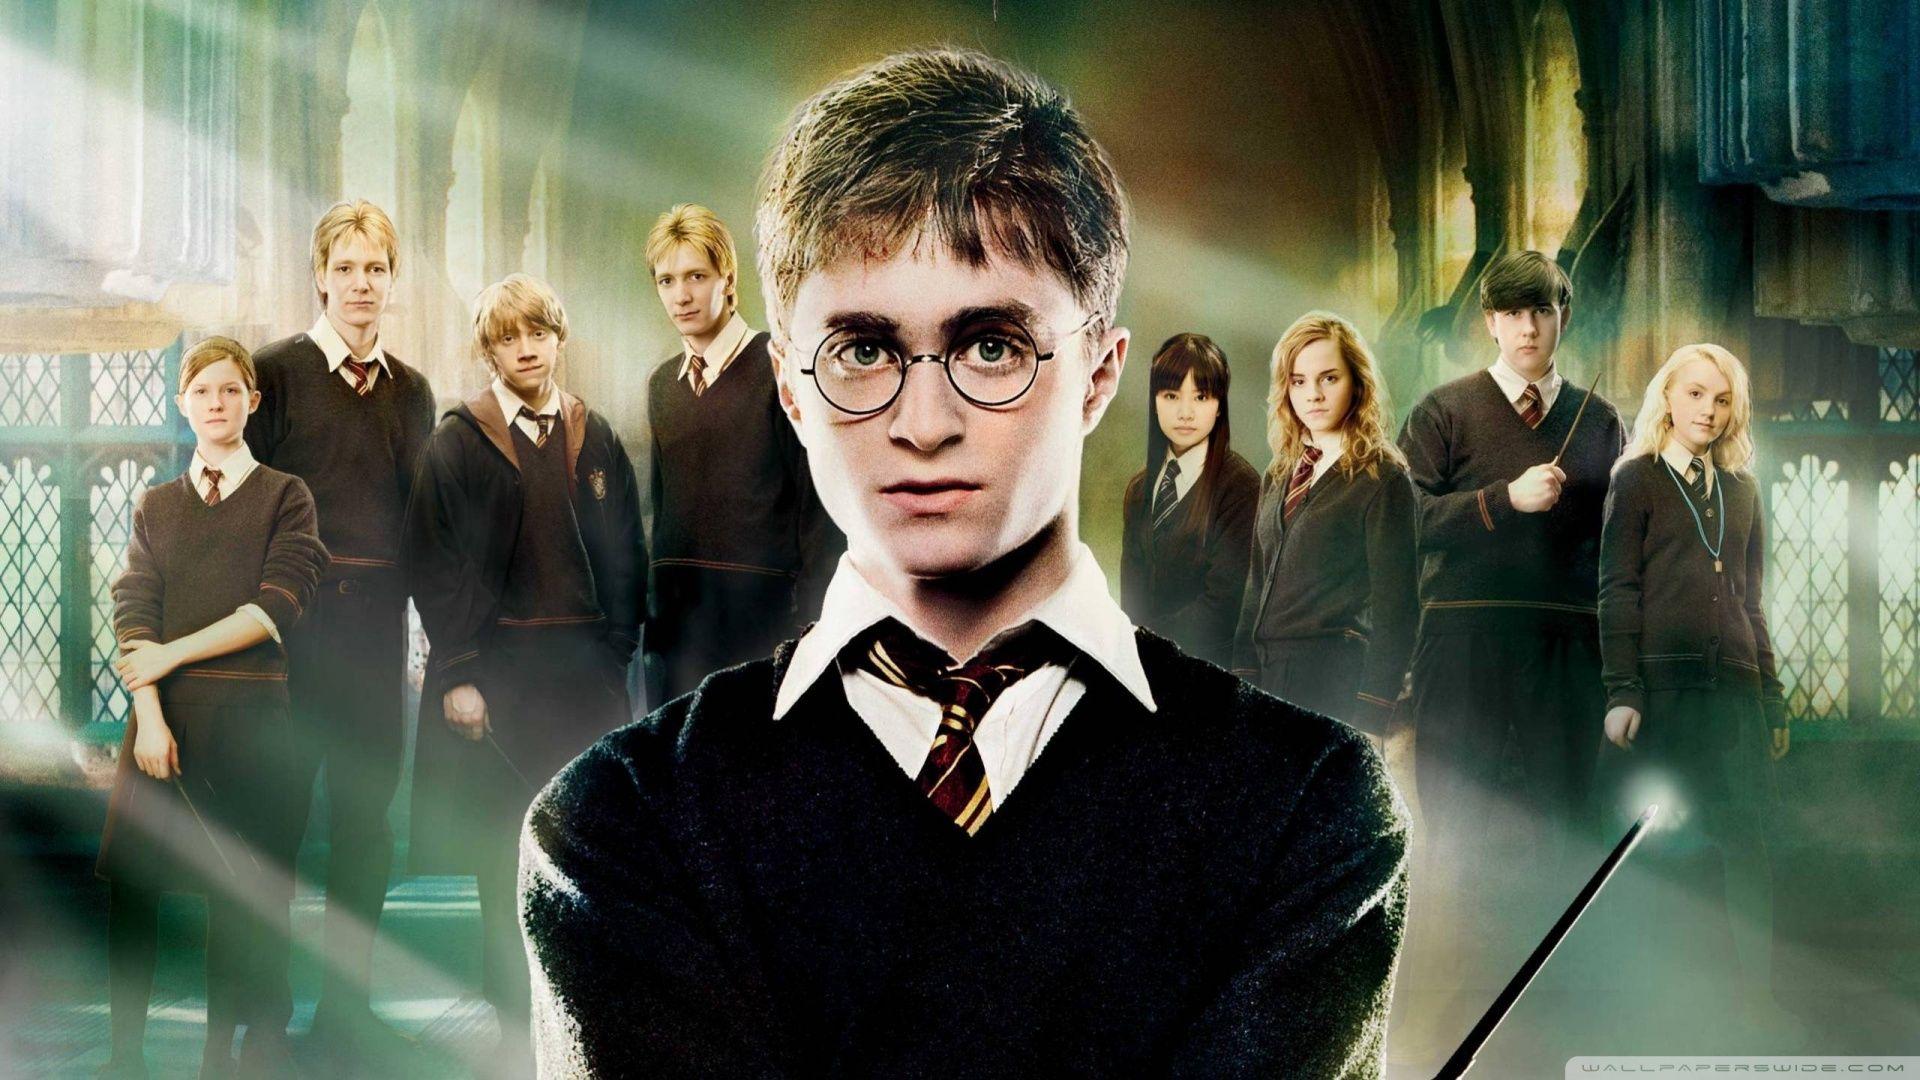 Harry Potter And The Order Of Phoenix HD desktop wallpaper, High